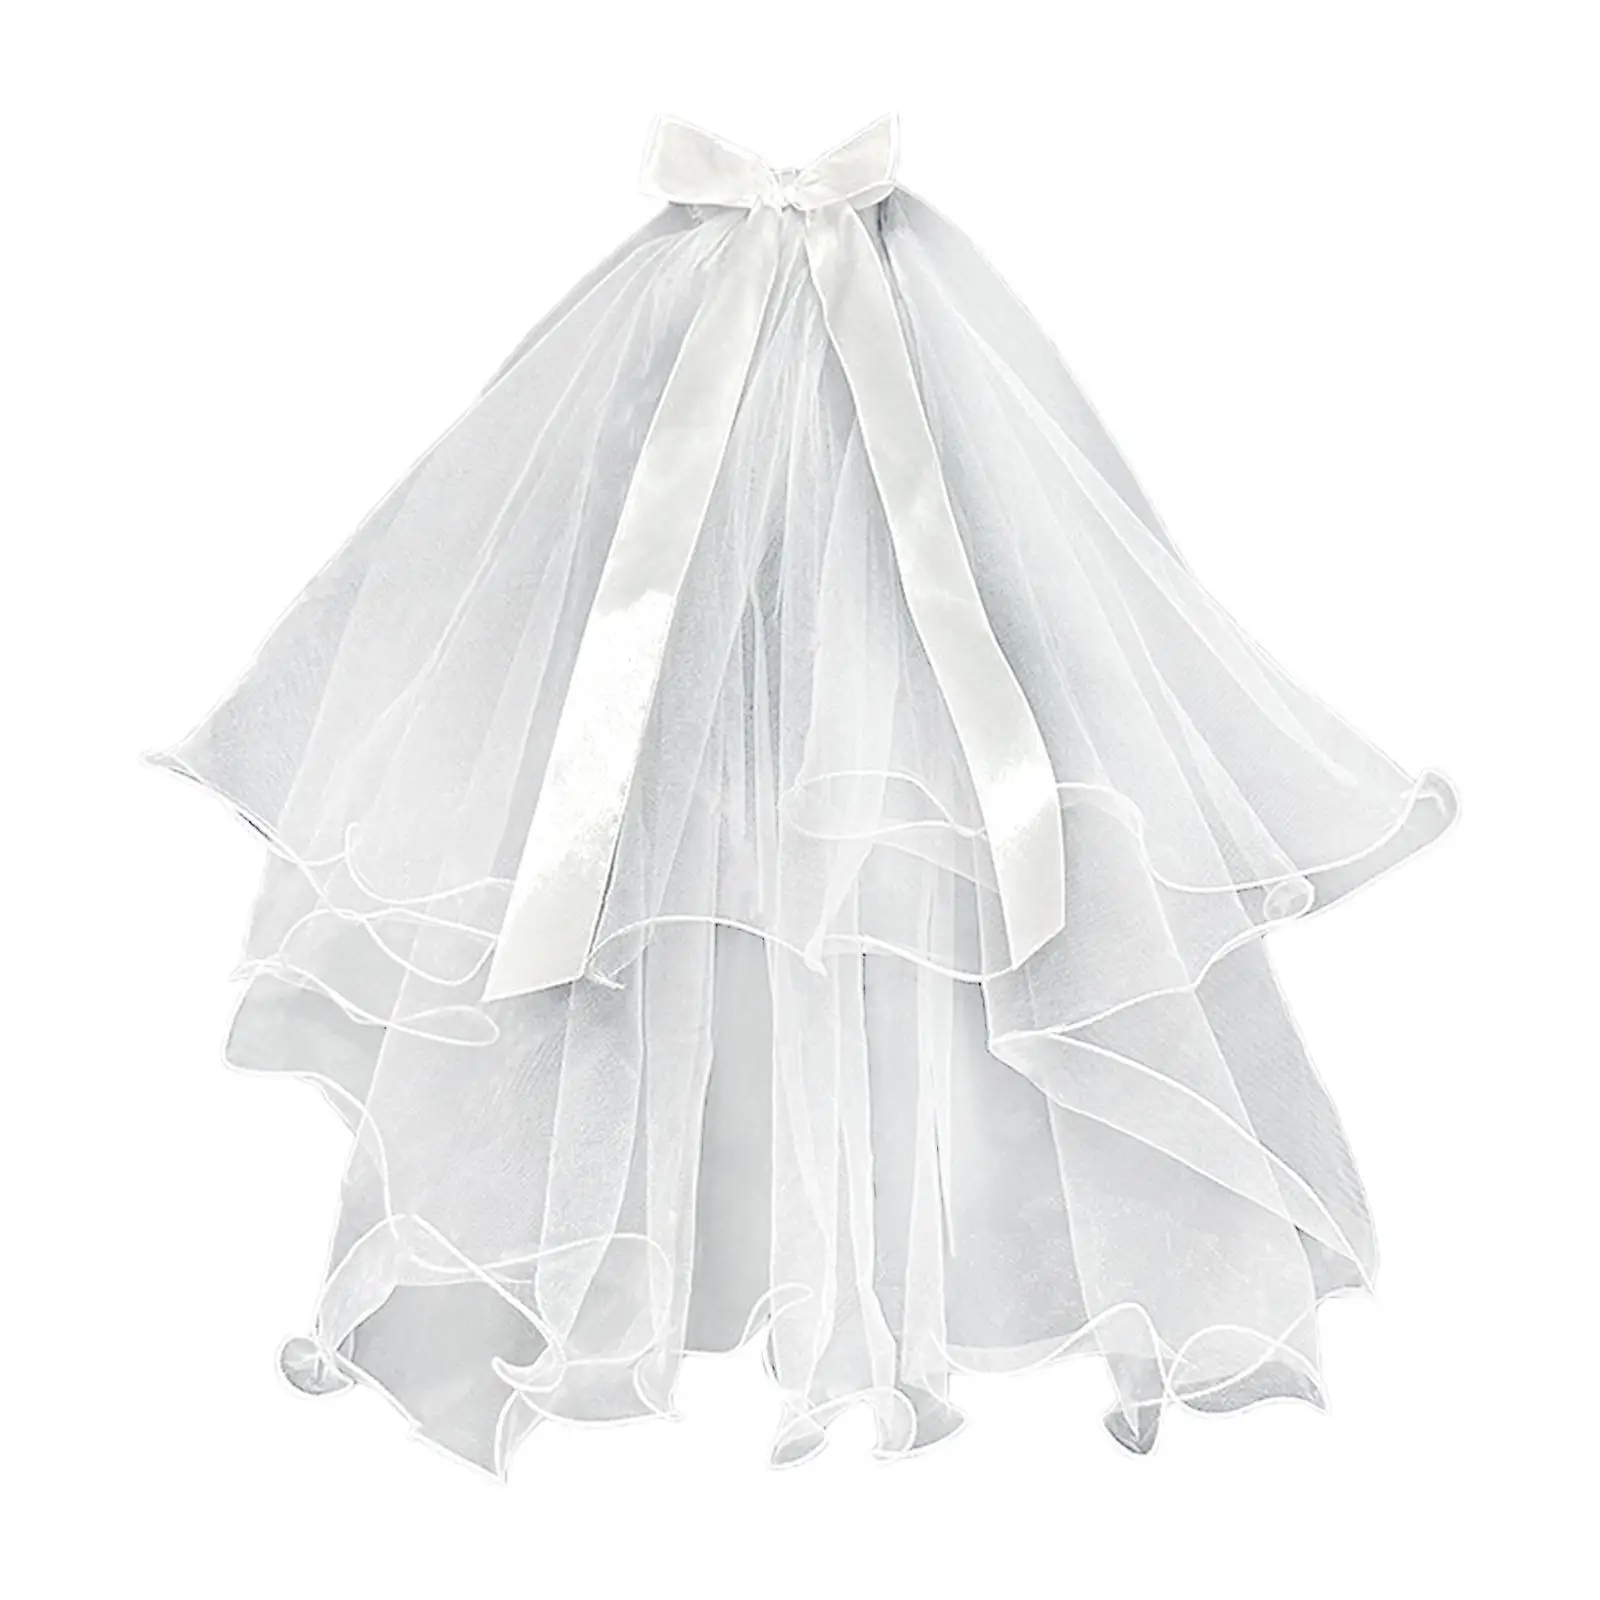 Bridal Hair Bow Veil Versatile White Princess Veil for Stage Performance Party Supplies Engagement Festivals Costume Accessories